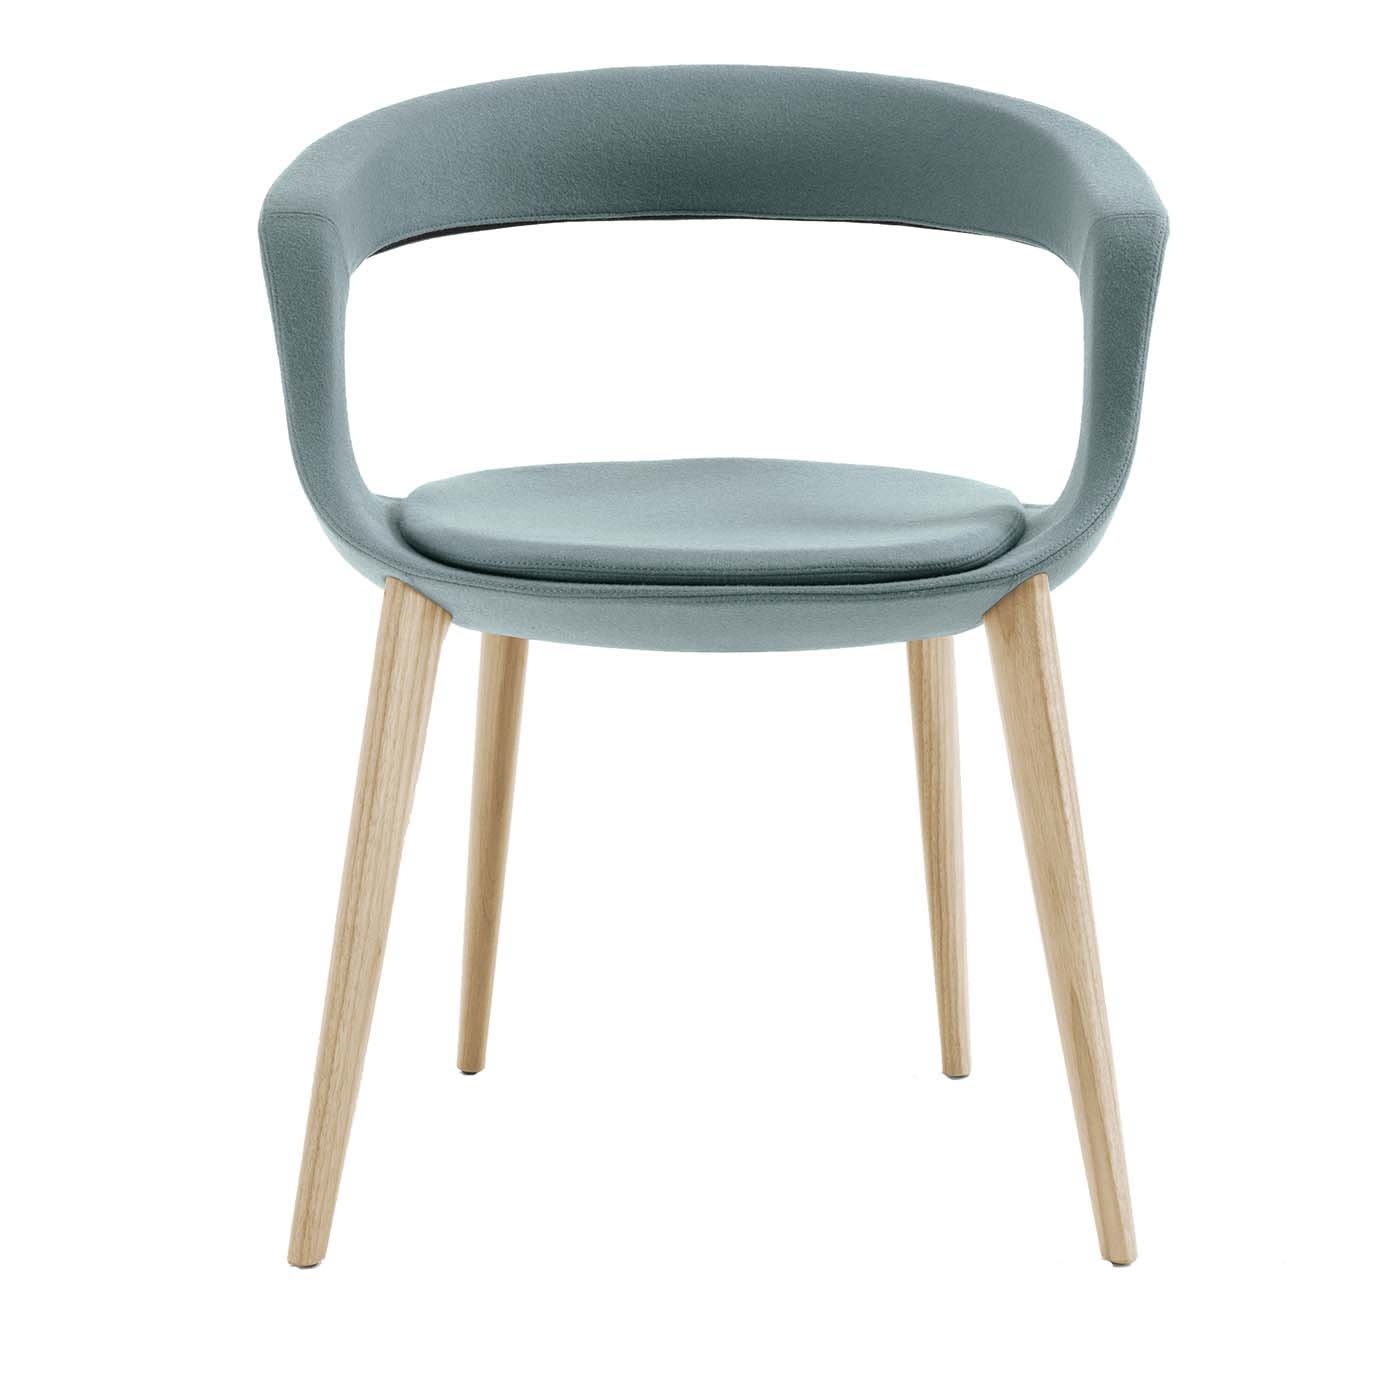 Frenchkiss Low-Backed Wooden-Legged Chair by Stefano Bigi - Enrico Pellizzoni